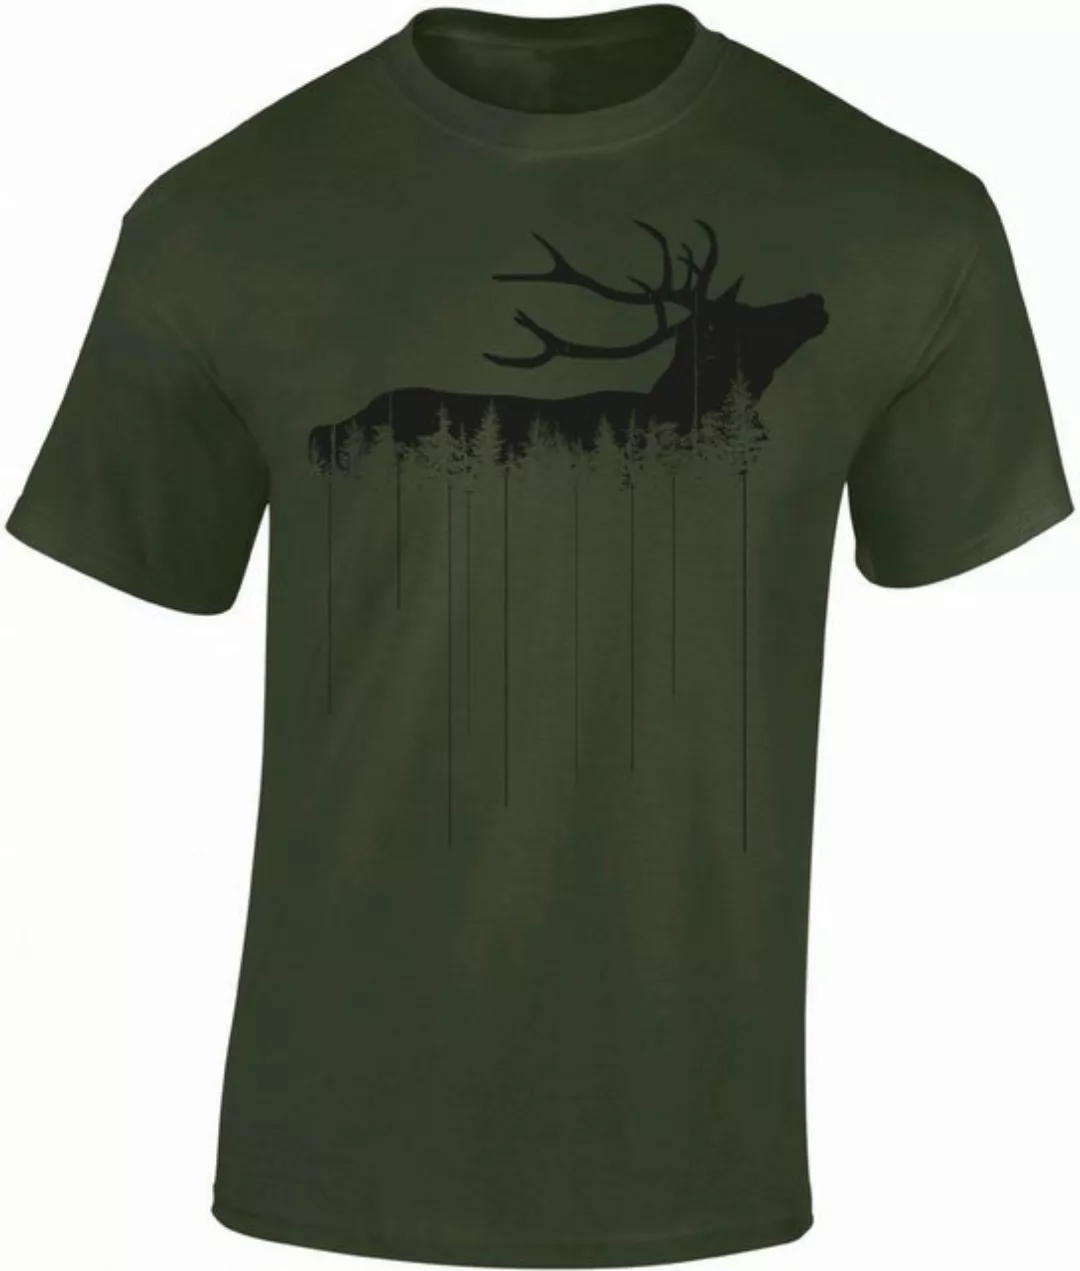 Baddery Print-Shirt "Waldhirsch" - Jäger T-Shirt - Jägerkleidung - Jagd Zub günstig online kaufen